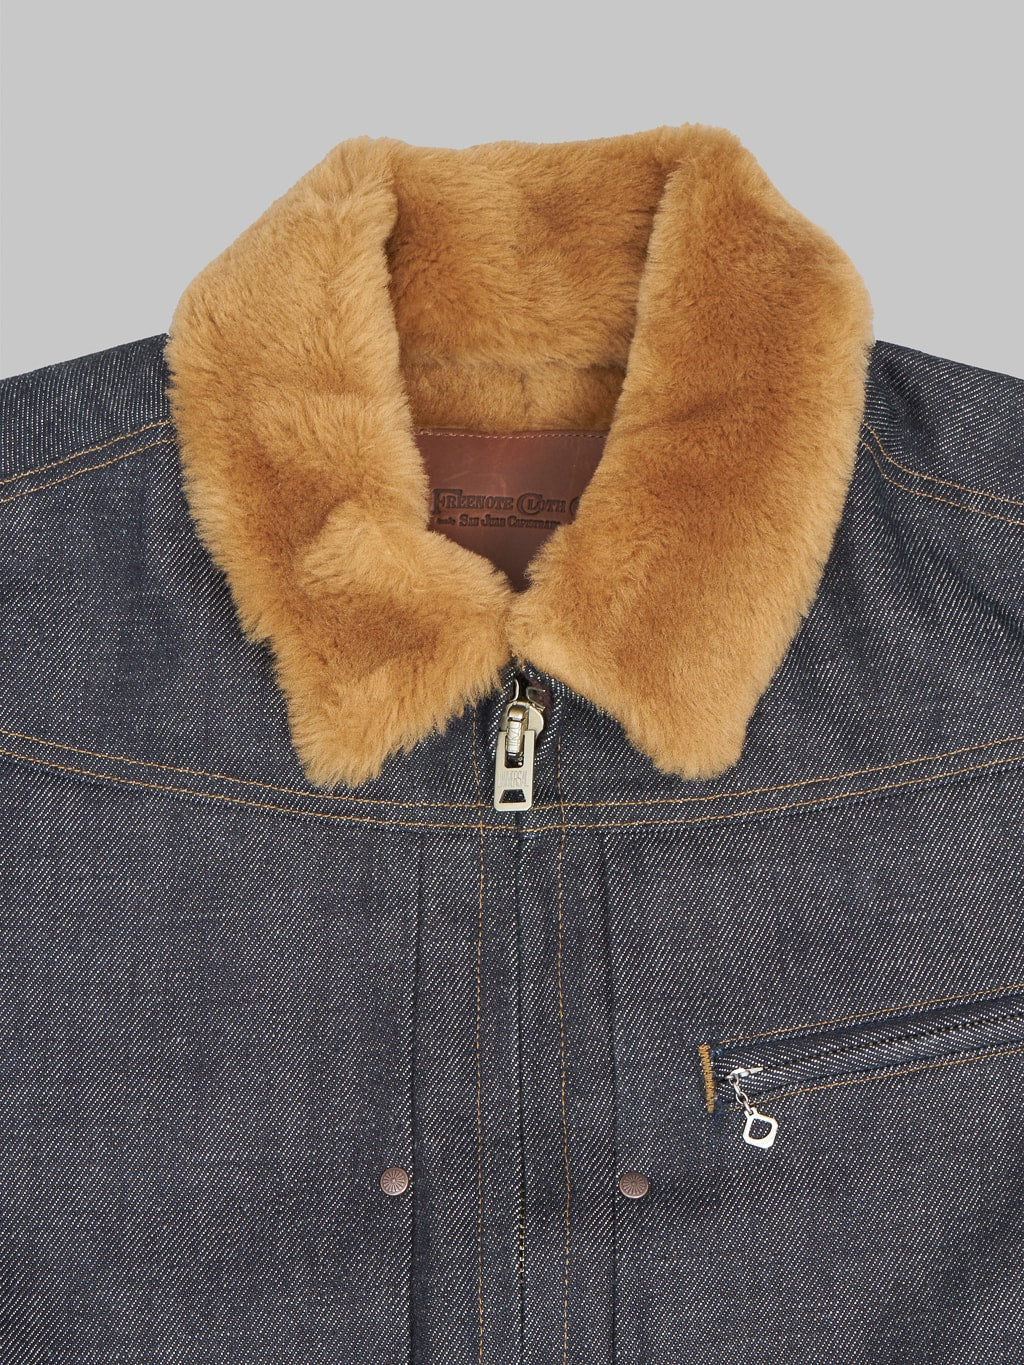 Freenote Cloth Denim Shearling Jacket fur collar original